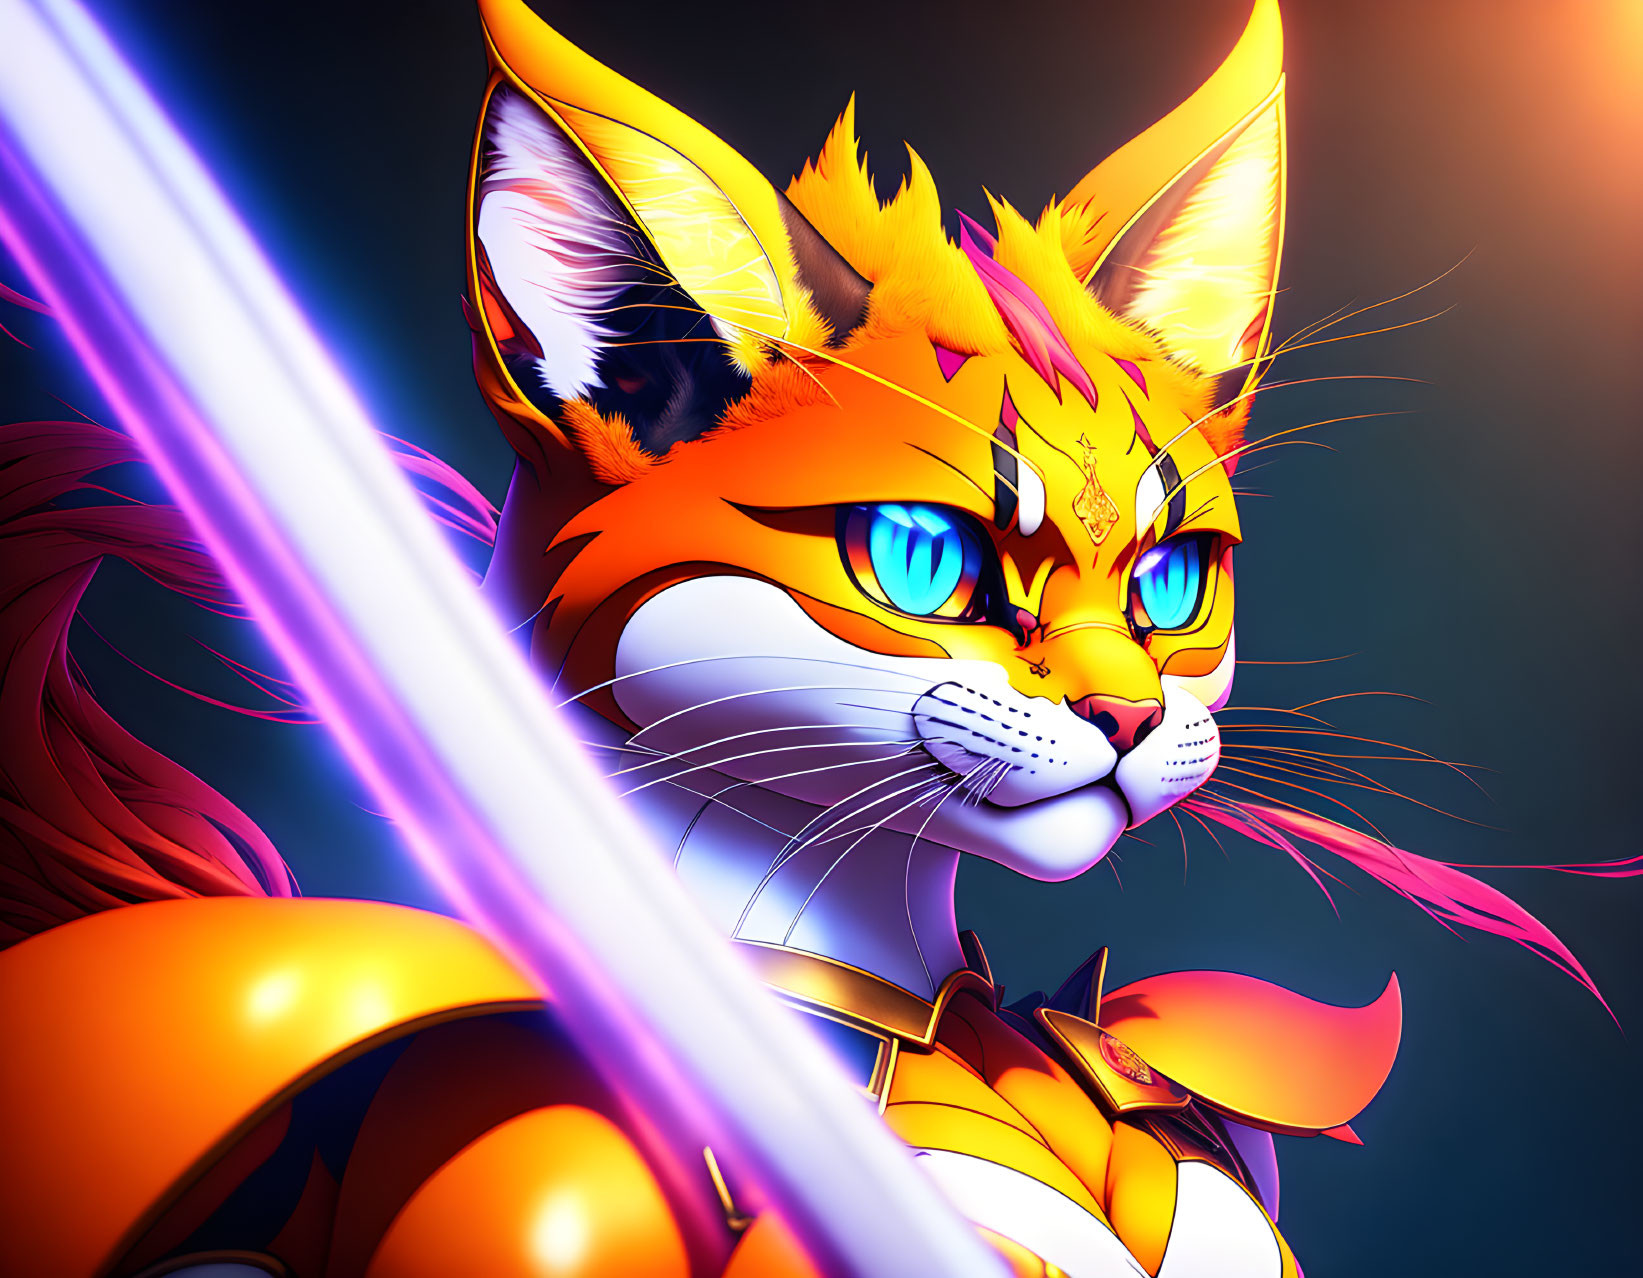 A Famous Anime Lynx-O of Thundercats